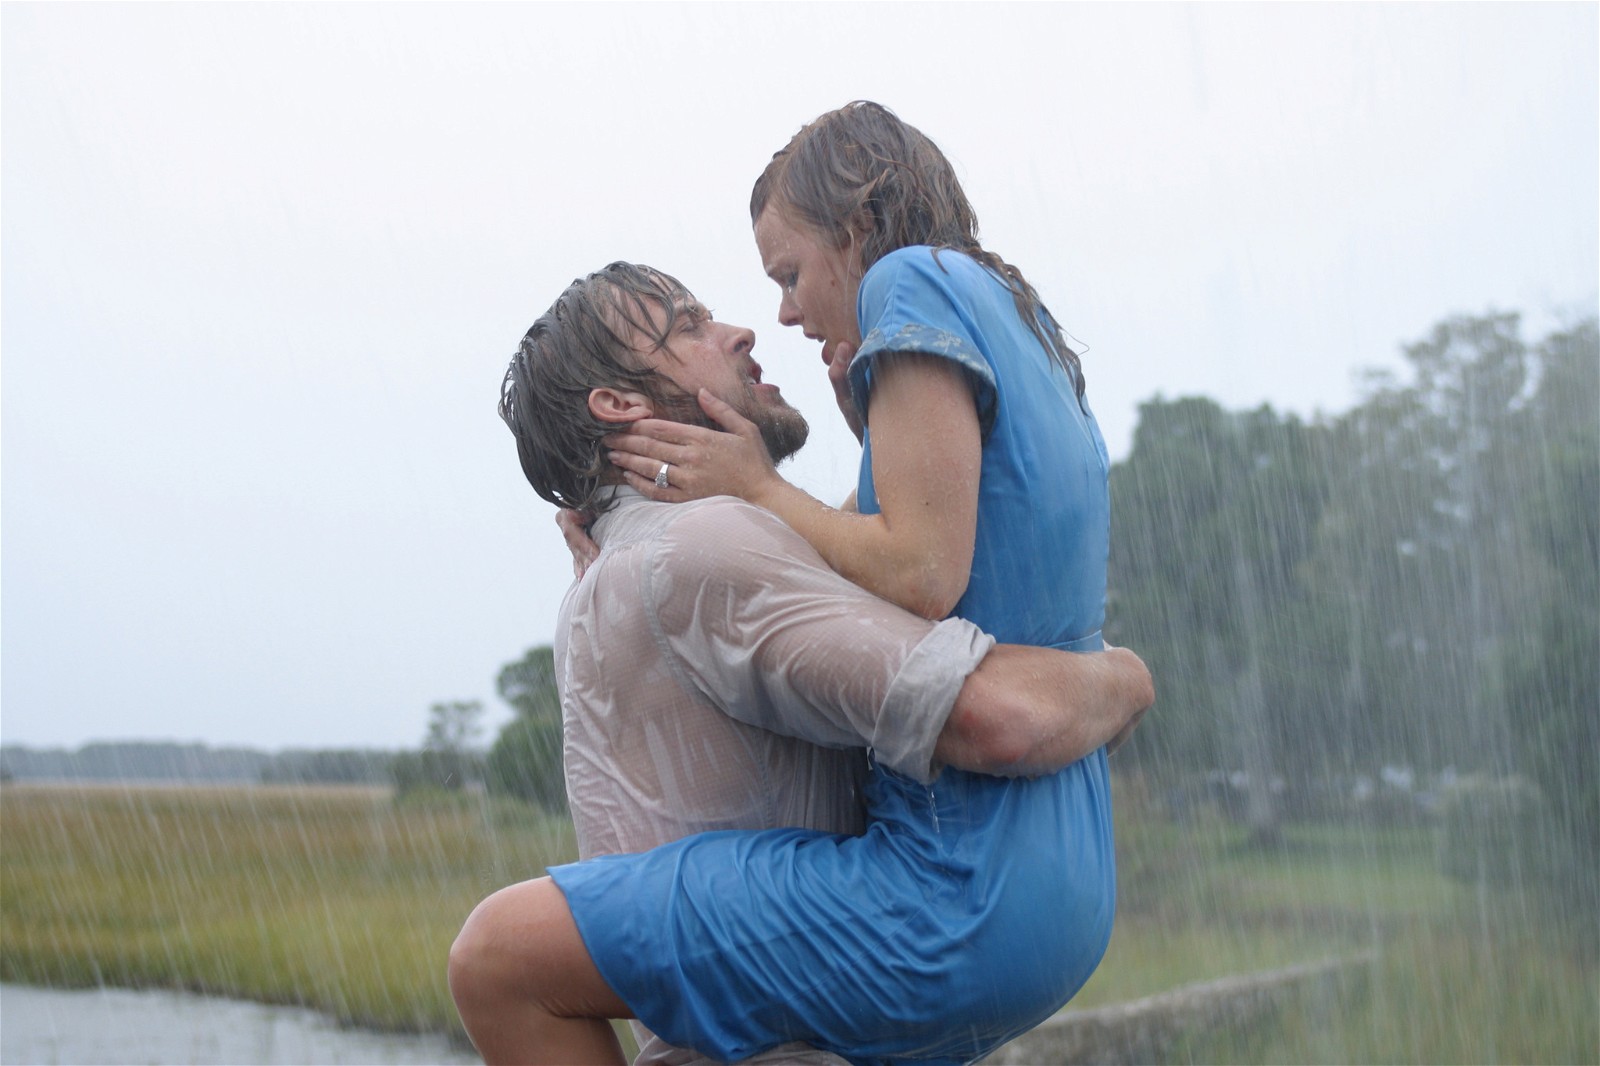 The Notebook starring Ryan Gosling and Rachel McAdams